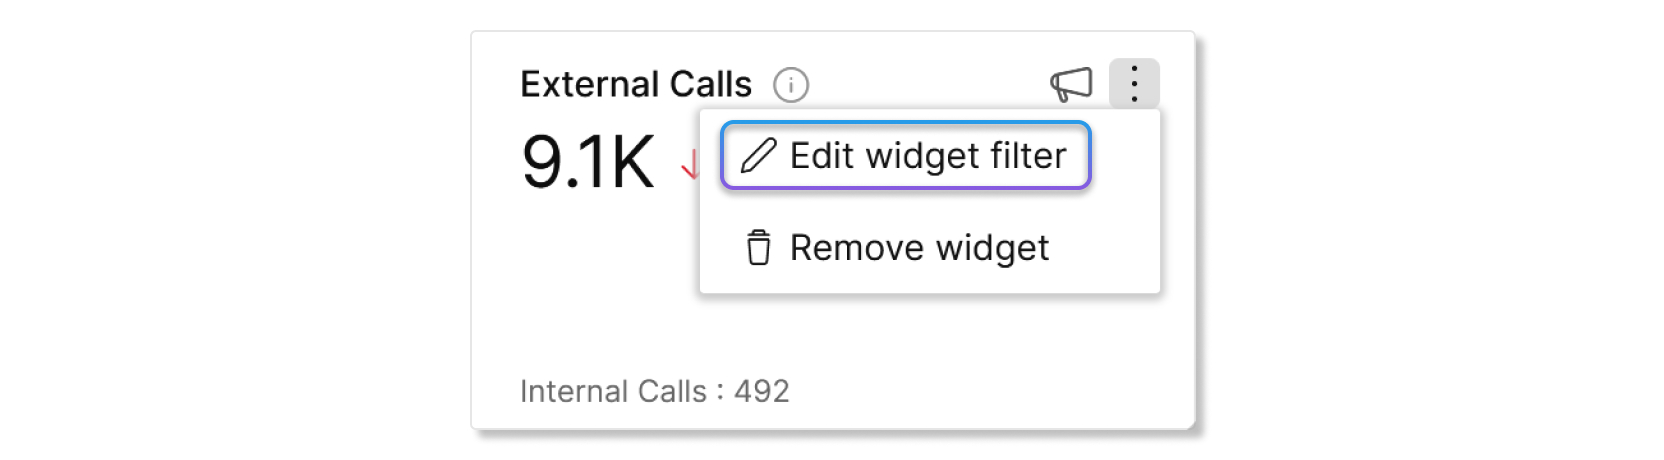 Edit widget filter button on a chart in Control Hub